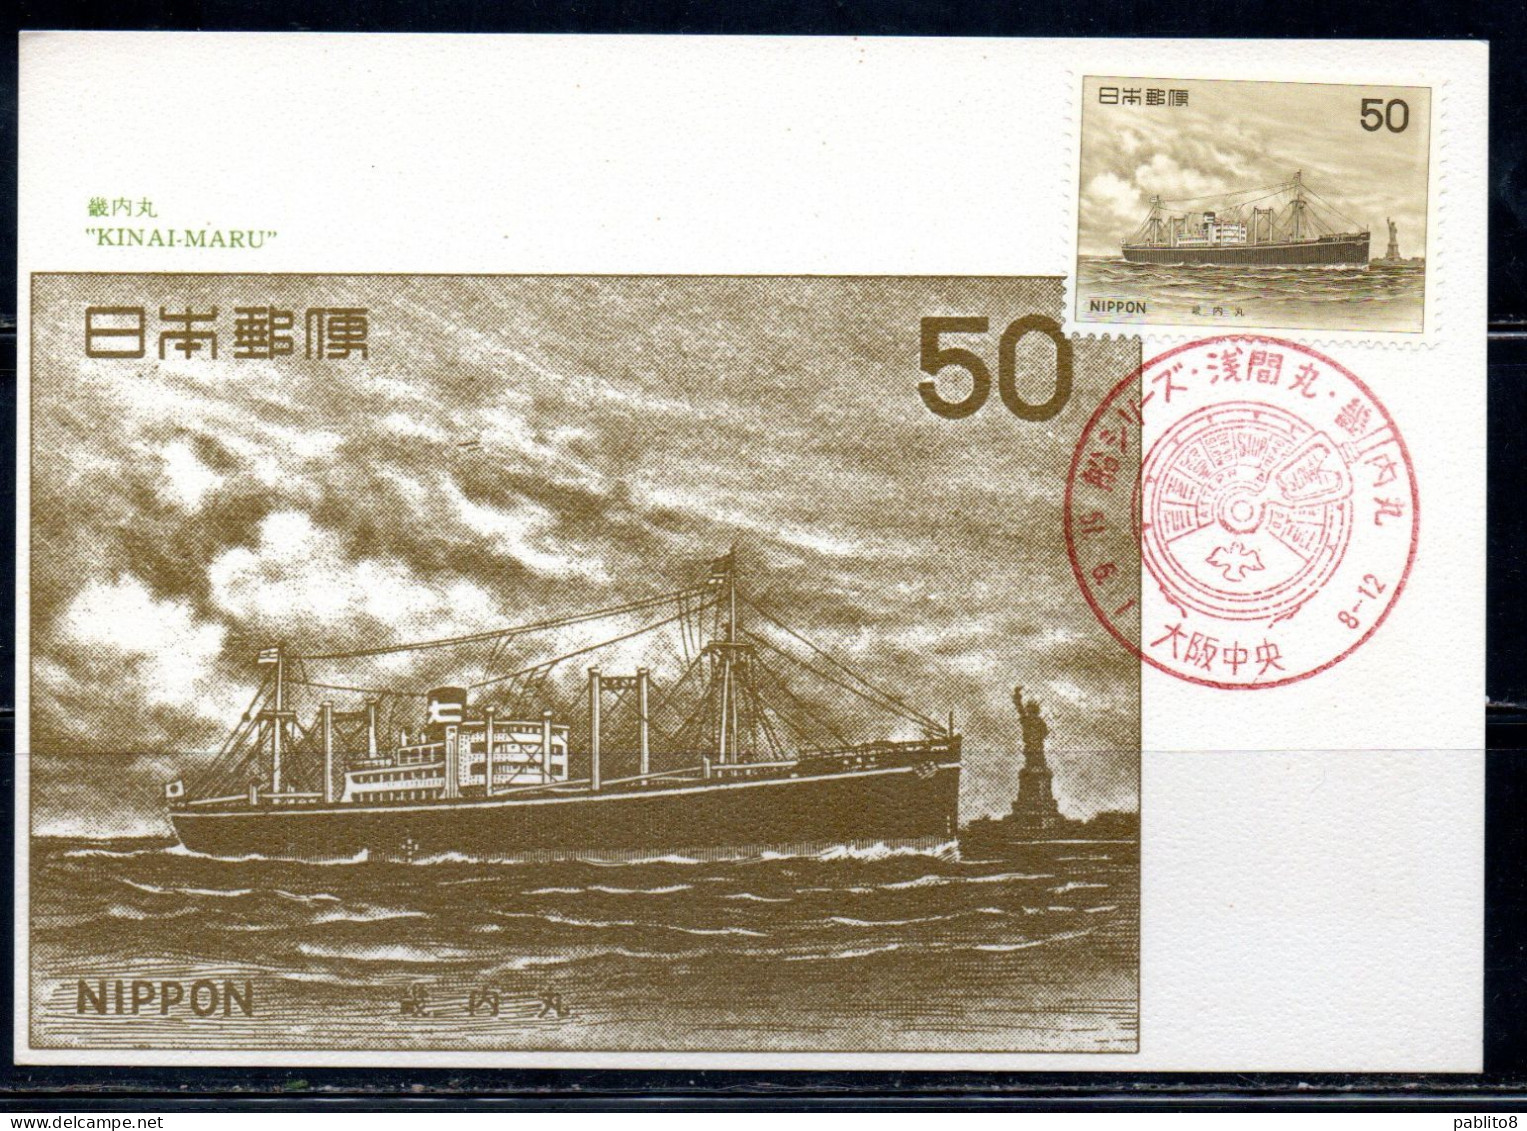 JAPAN GIAPPONE 1975 1976 HISTORIC SHIPS ISSUE KINAI-MARU SHIP 50y MAXI MAXIMUM CARD - Maximumkarten